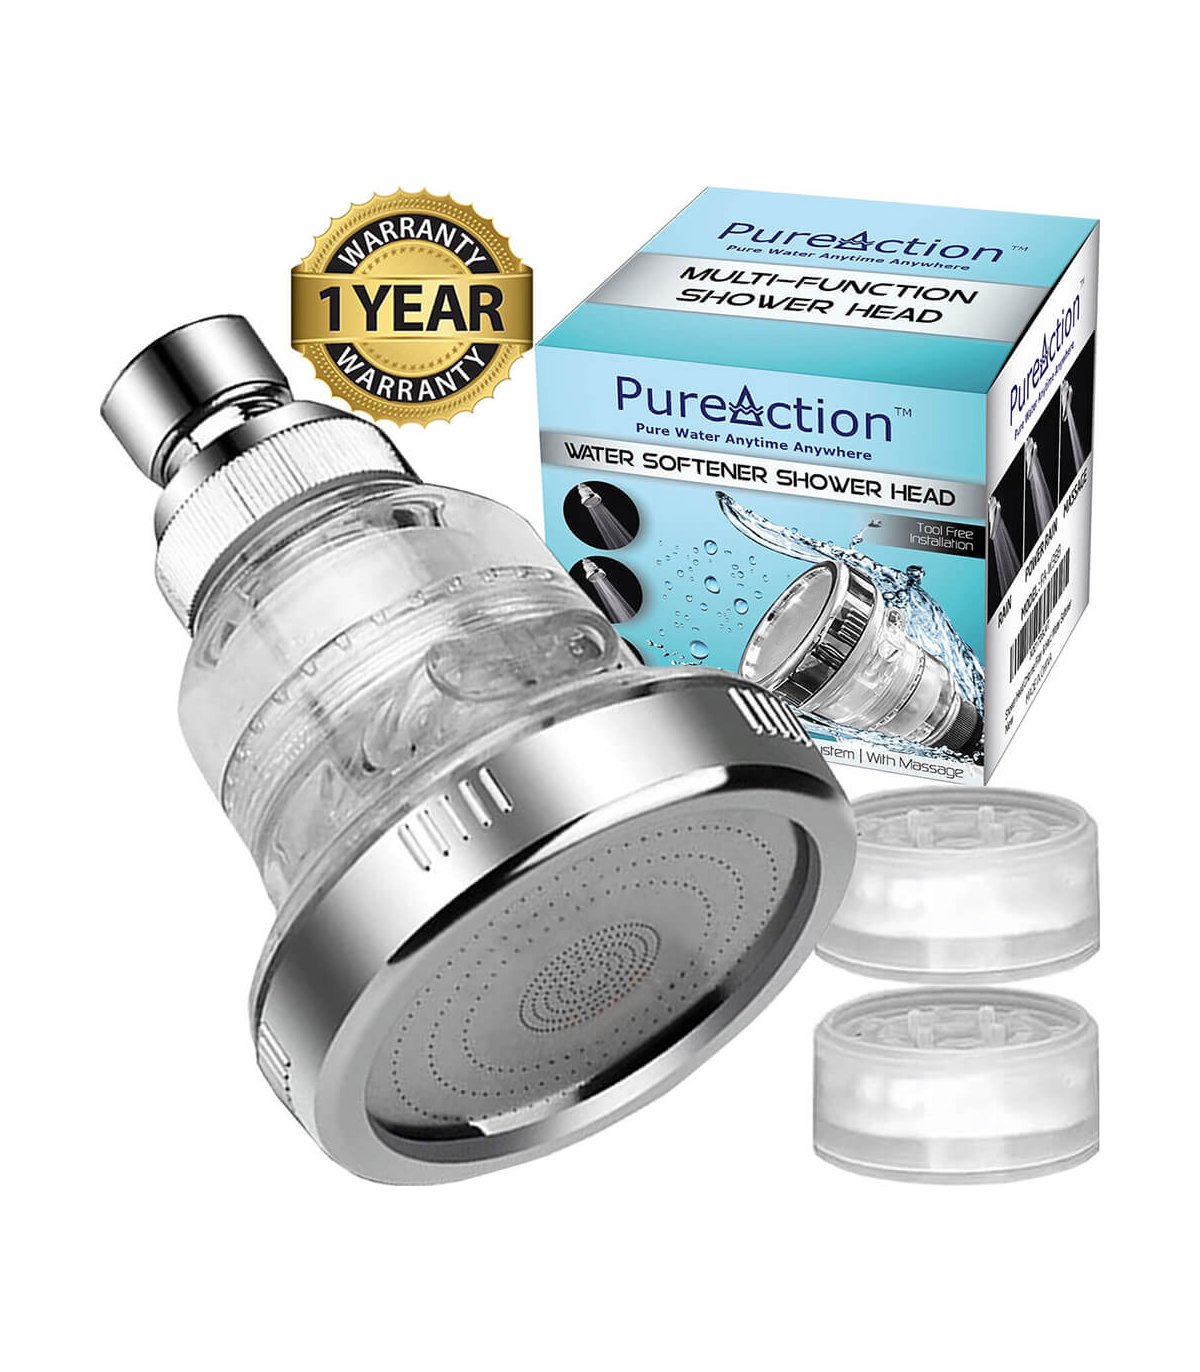 PureAction Water Softener Shower Head